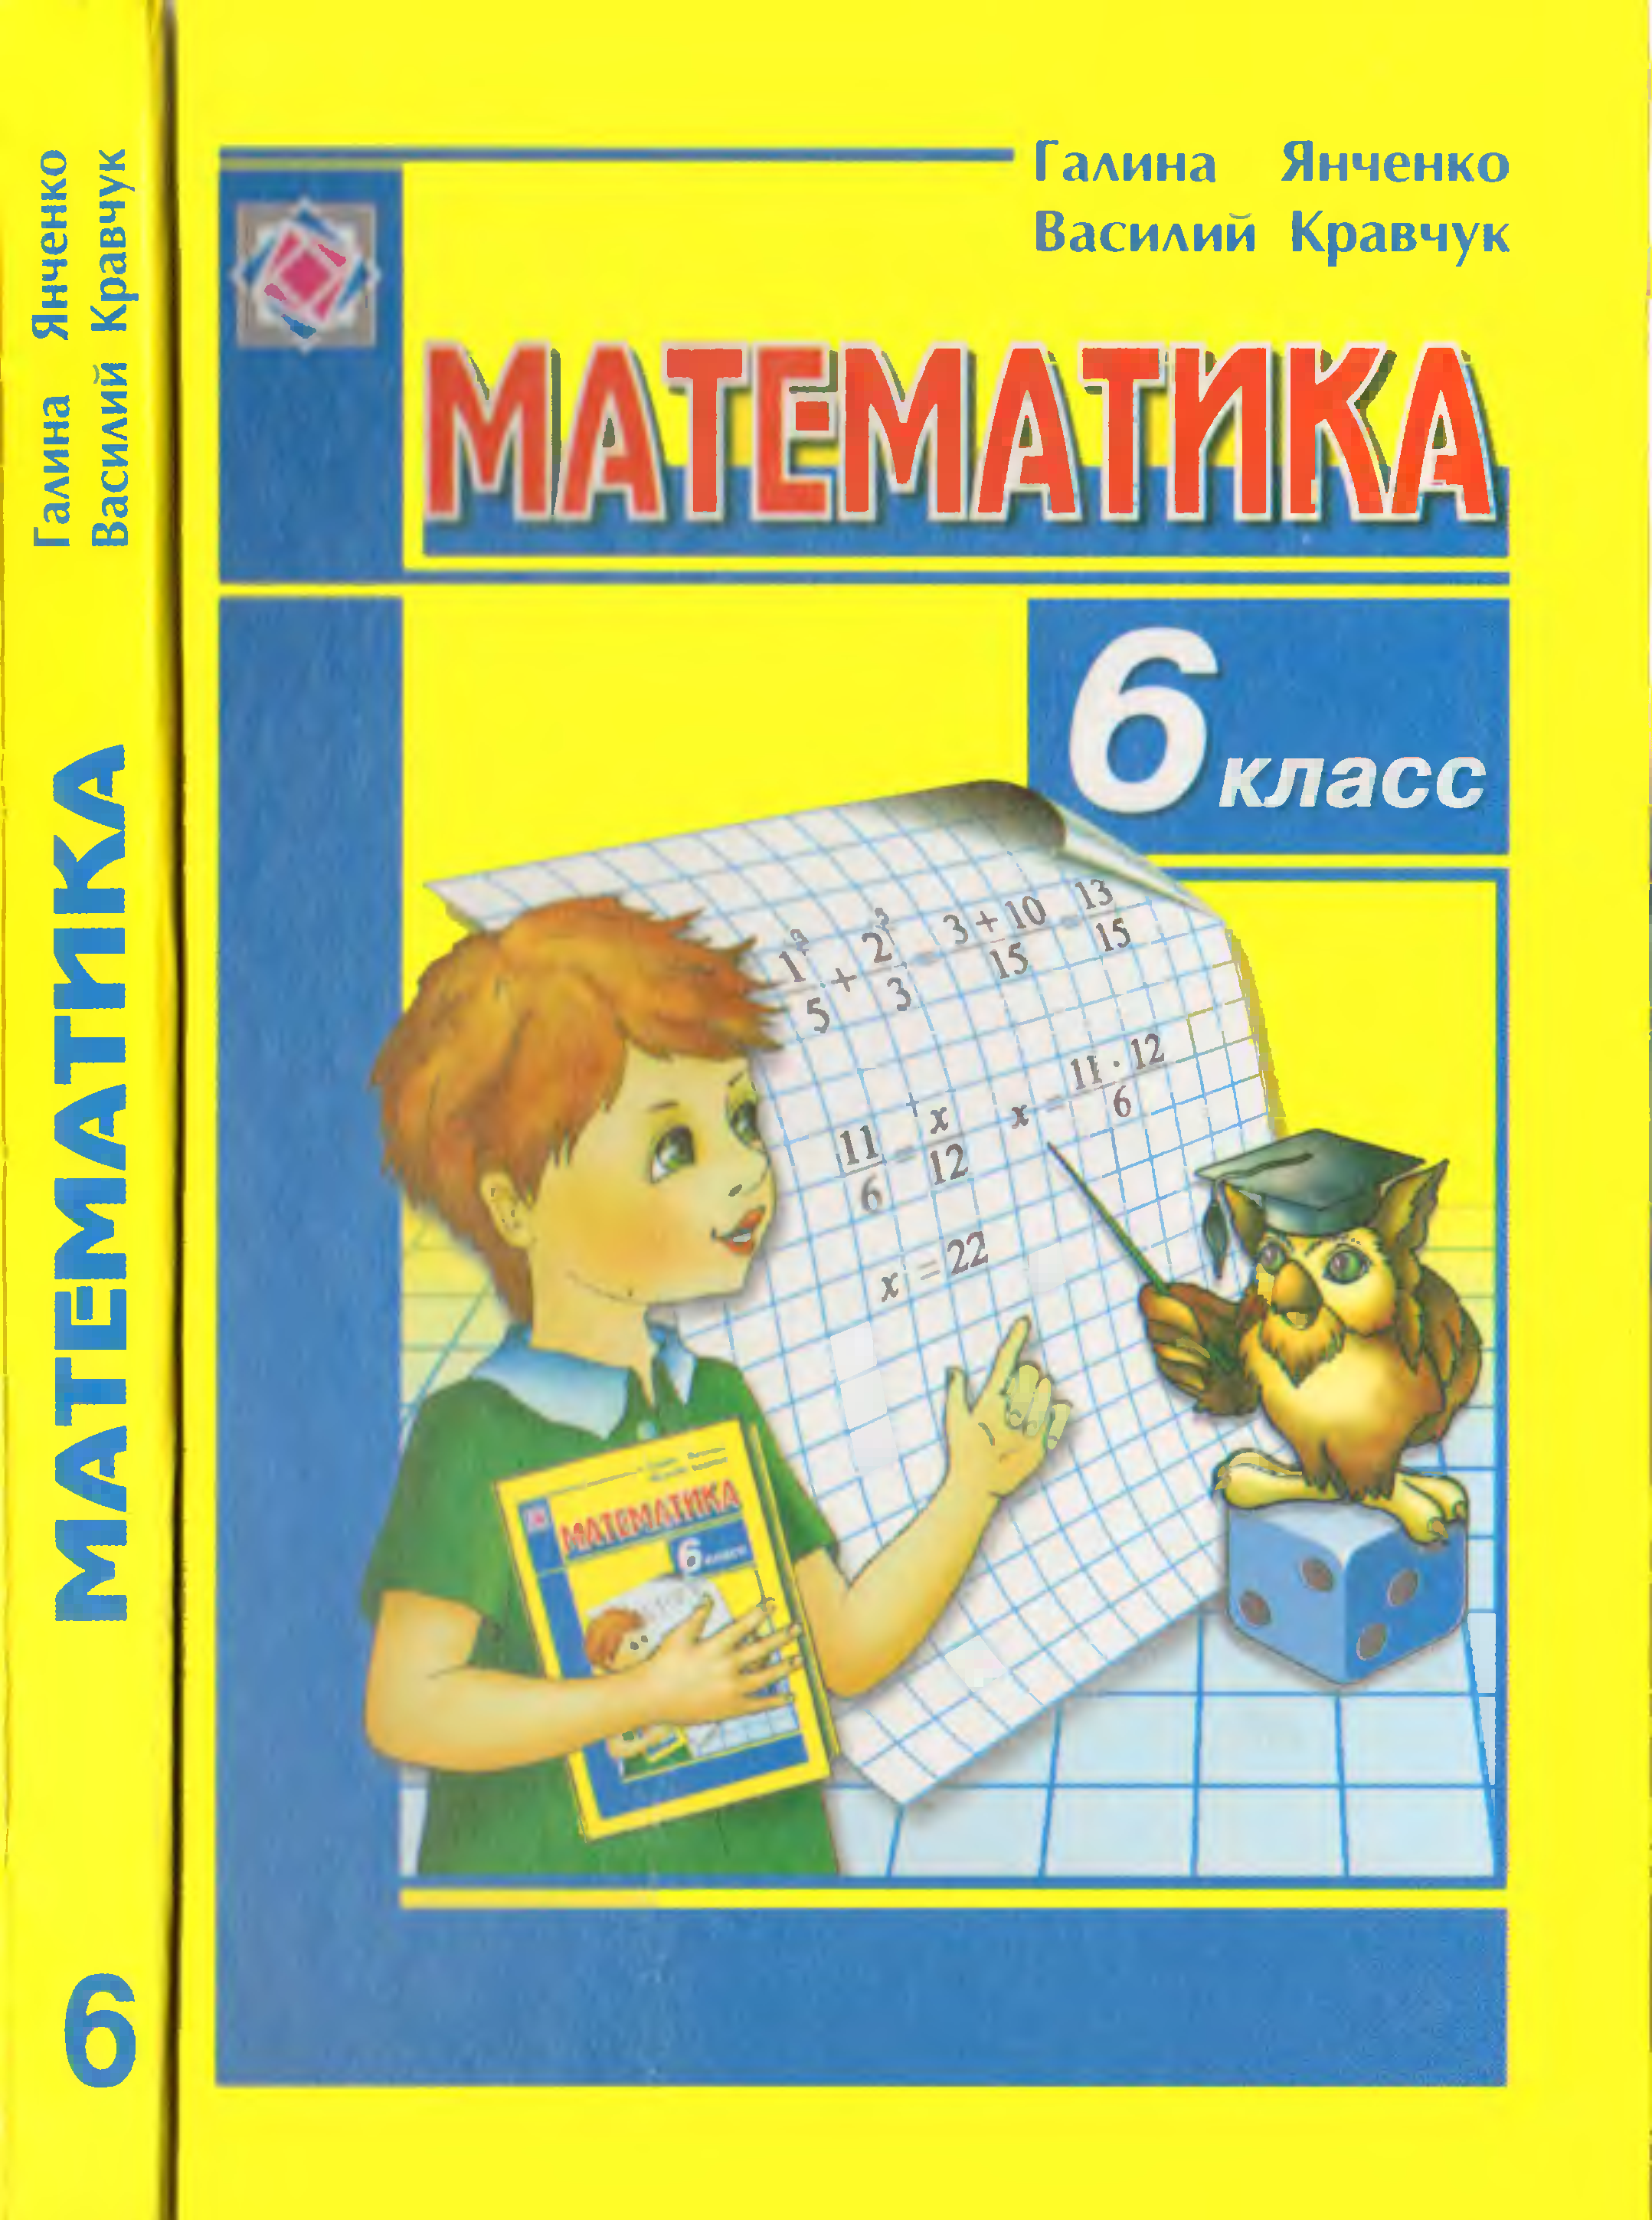 Математика 6 класс. Украинские учебники по математике. Учебник по математике 6 класс. Учебник по 6 класс по математике. Учебник математики 6 класс.